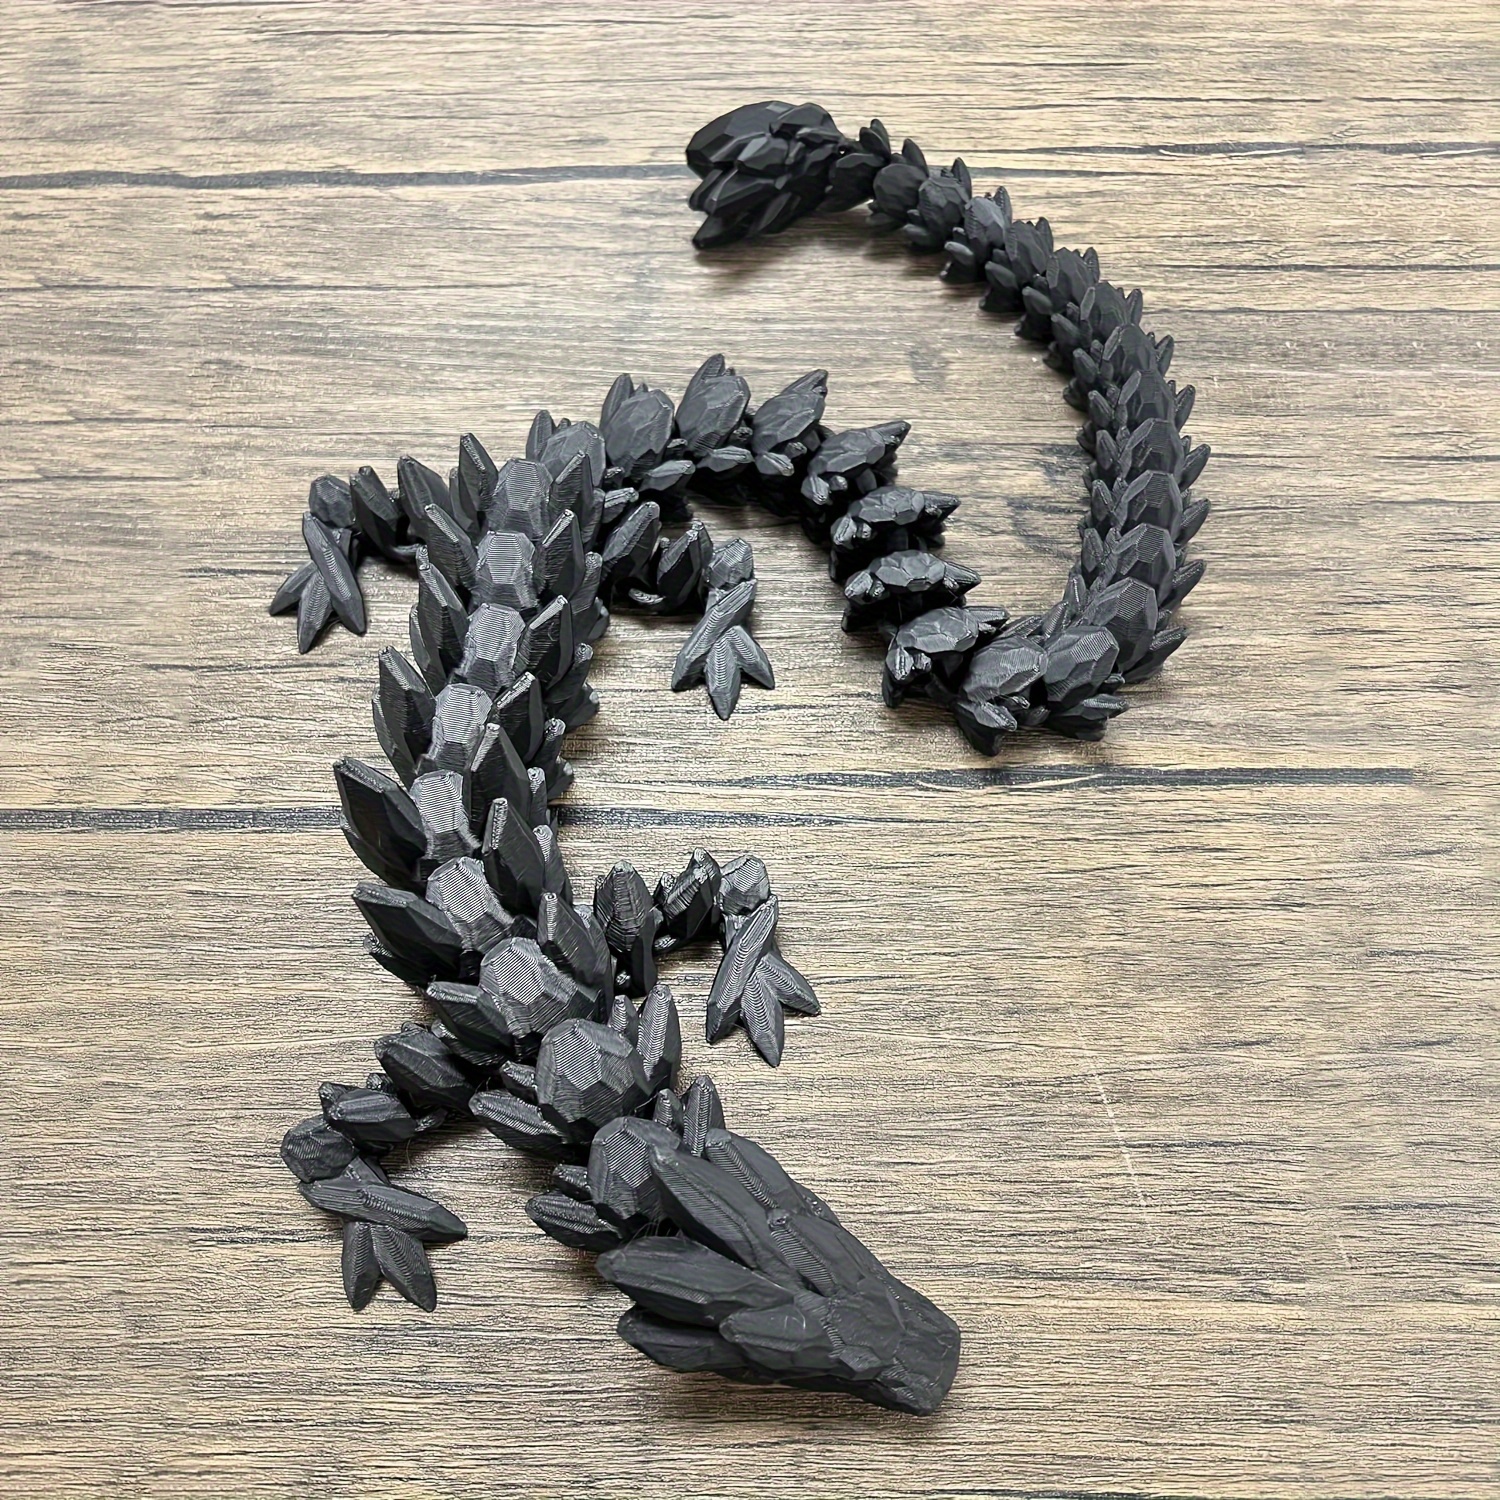  Addcean 3D Printed Dragon in Egg, Full Articulated